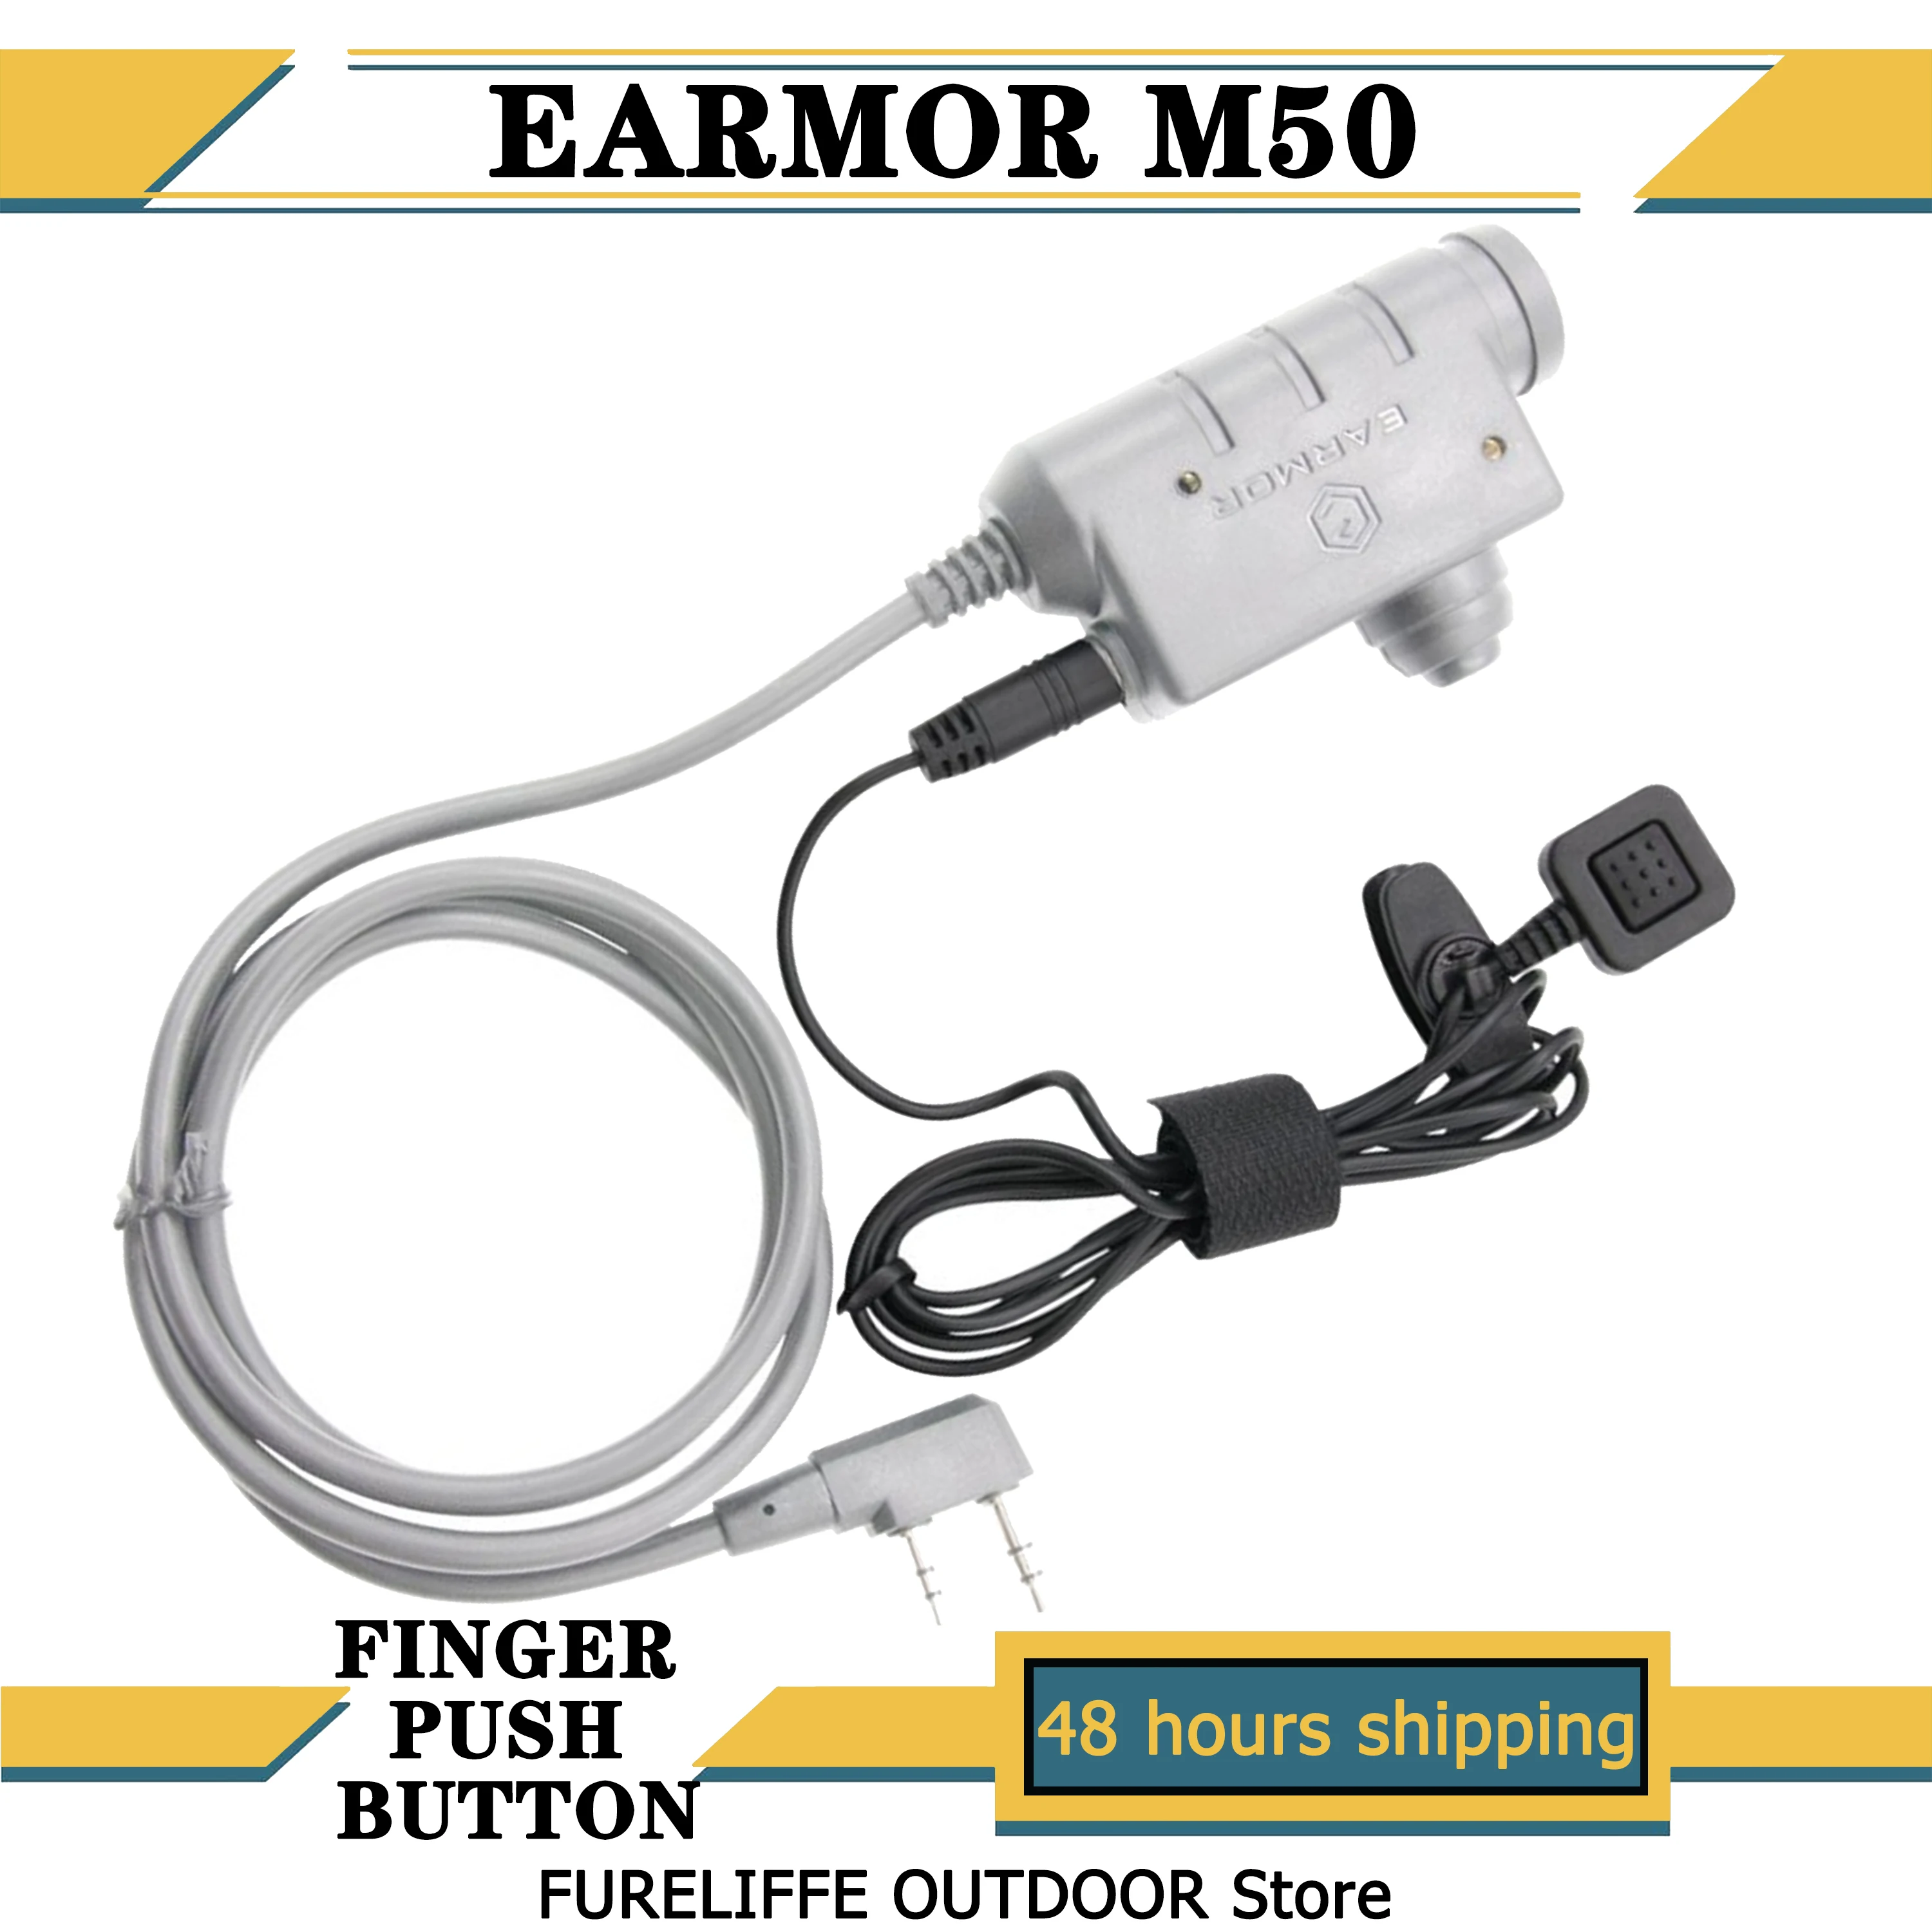 EARMOR M50 tactical headset PTT finger call button shooting earmuffs PTT extended finger button adapter compatible with M51 PTT